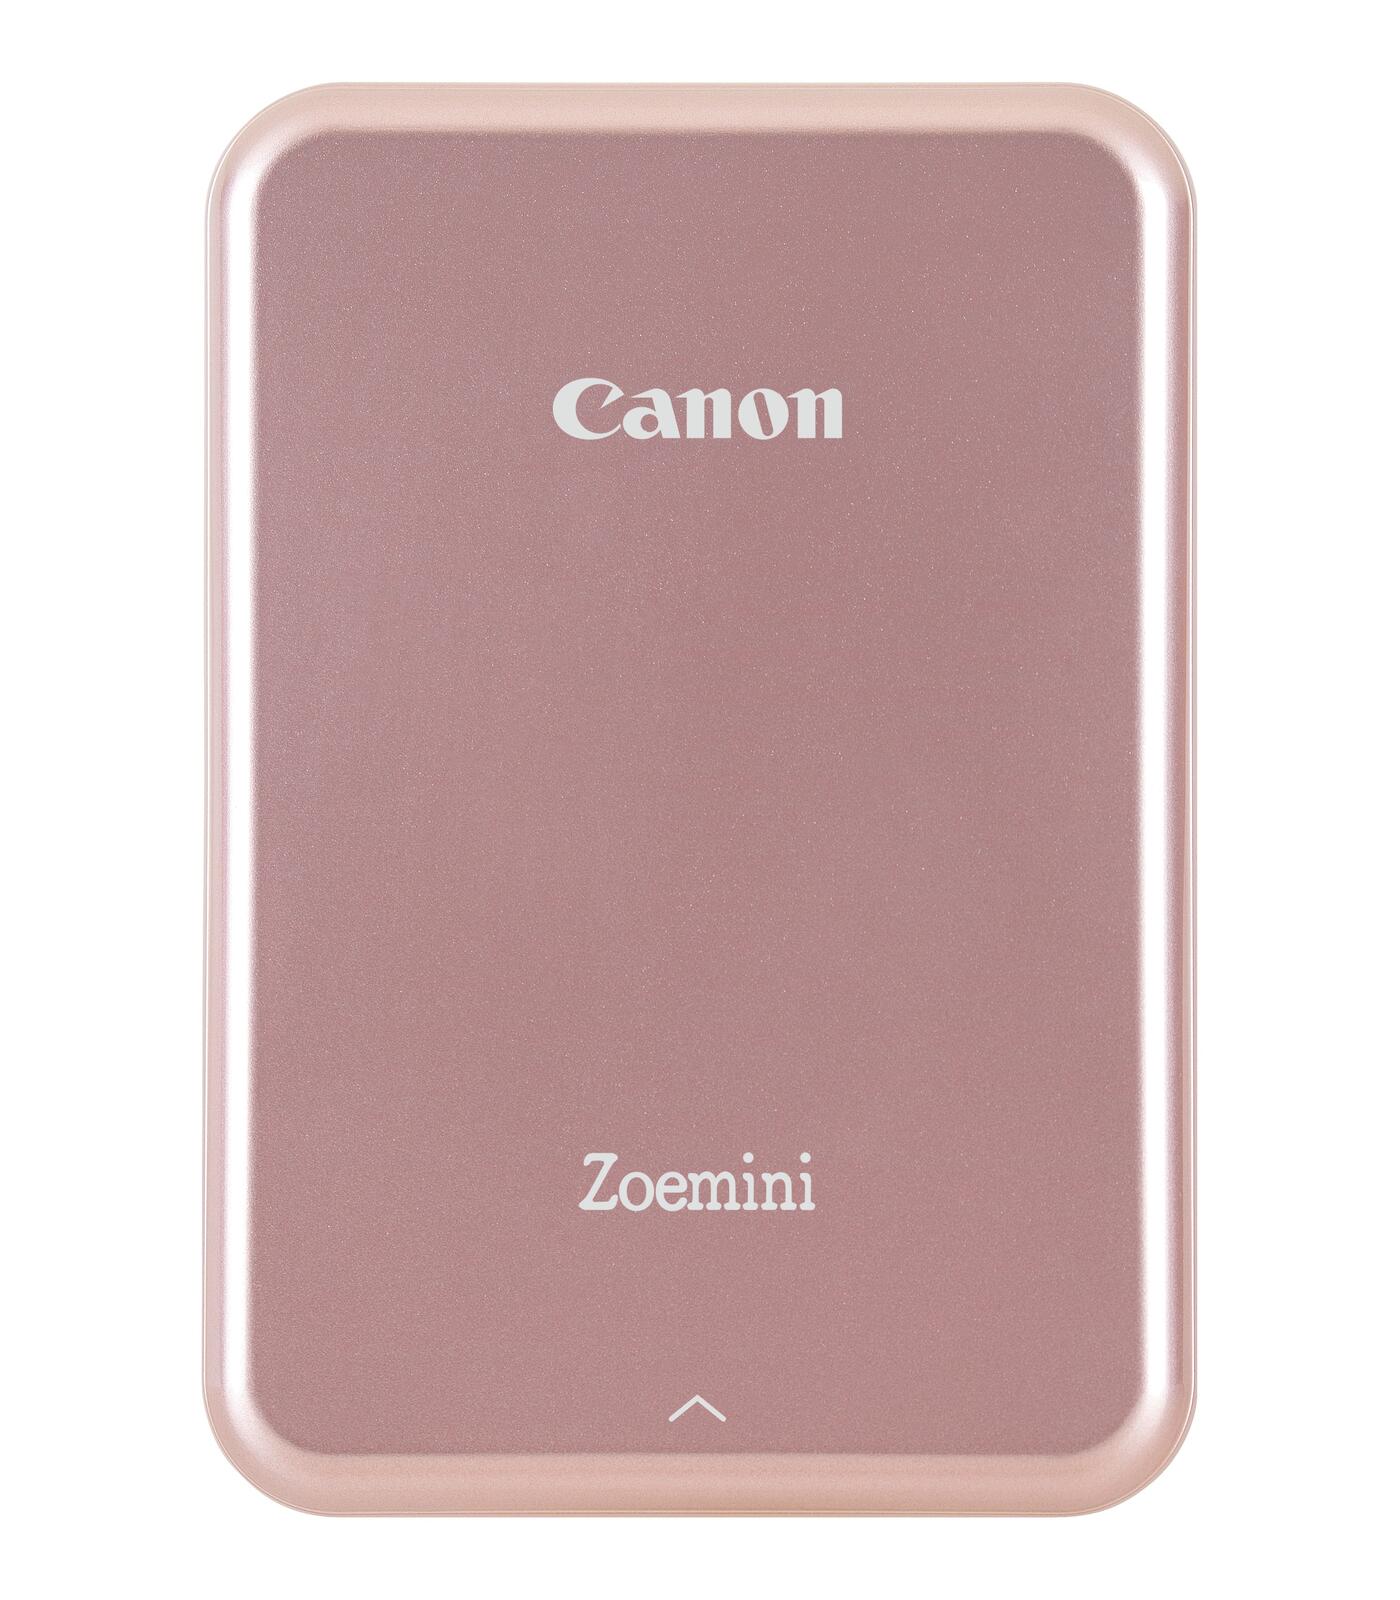 Canon Zoemini pink